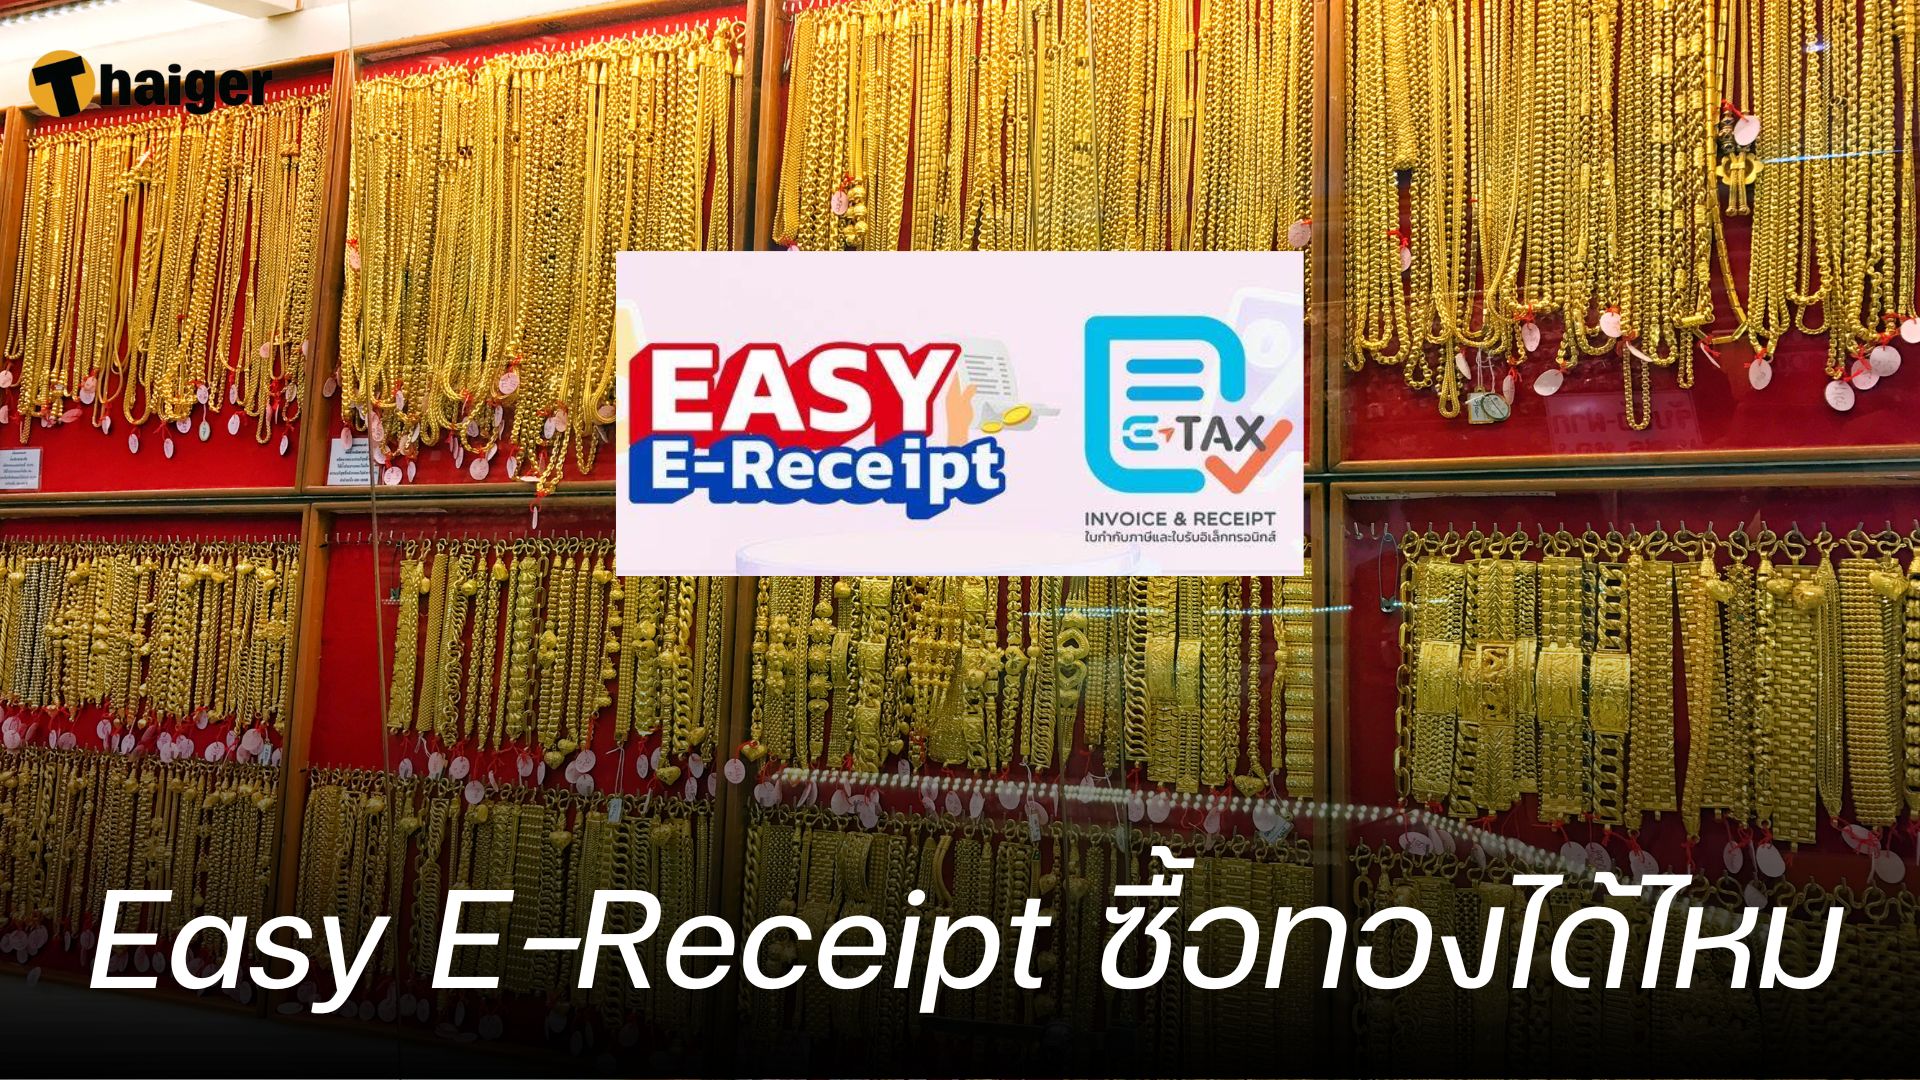 Easy E-Receipt ซื้อทองได้ไหม